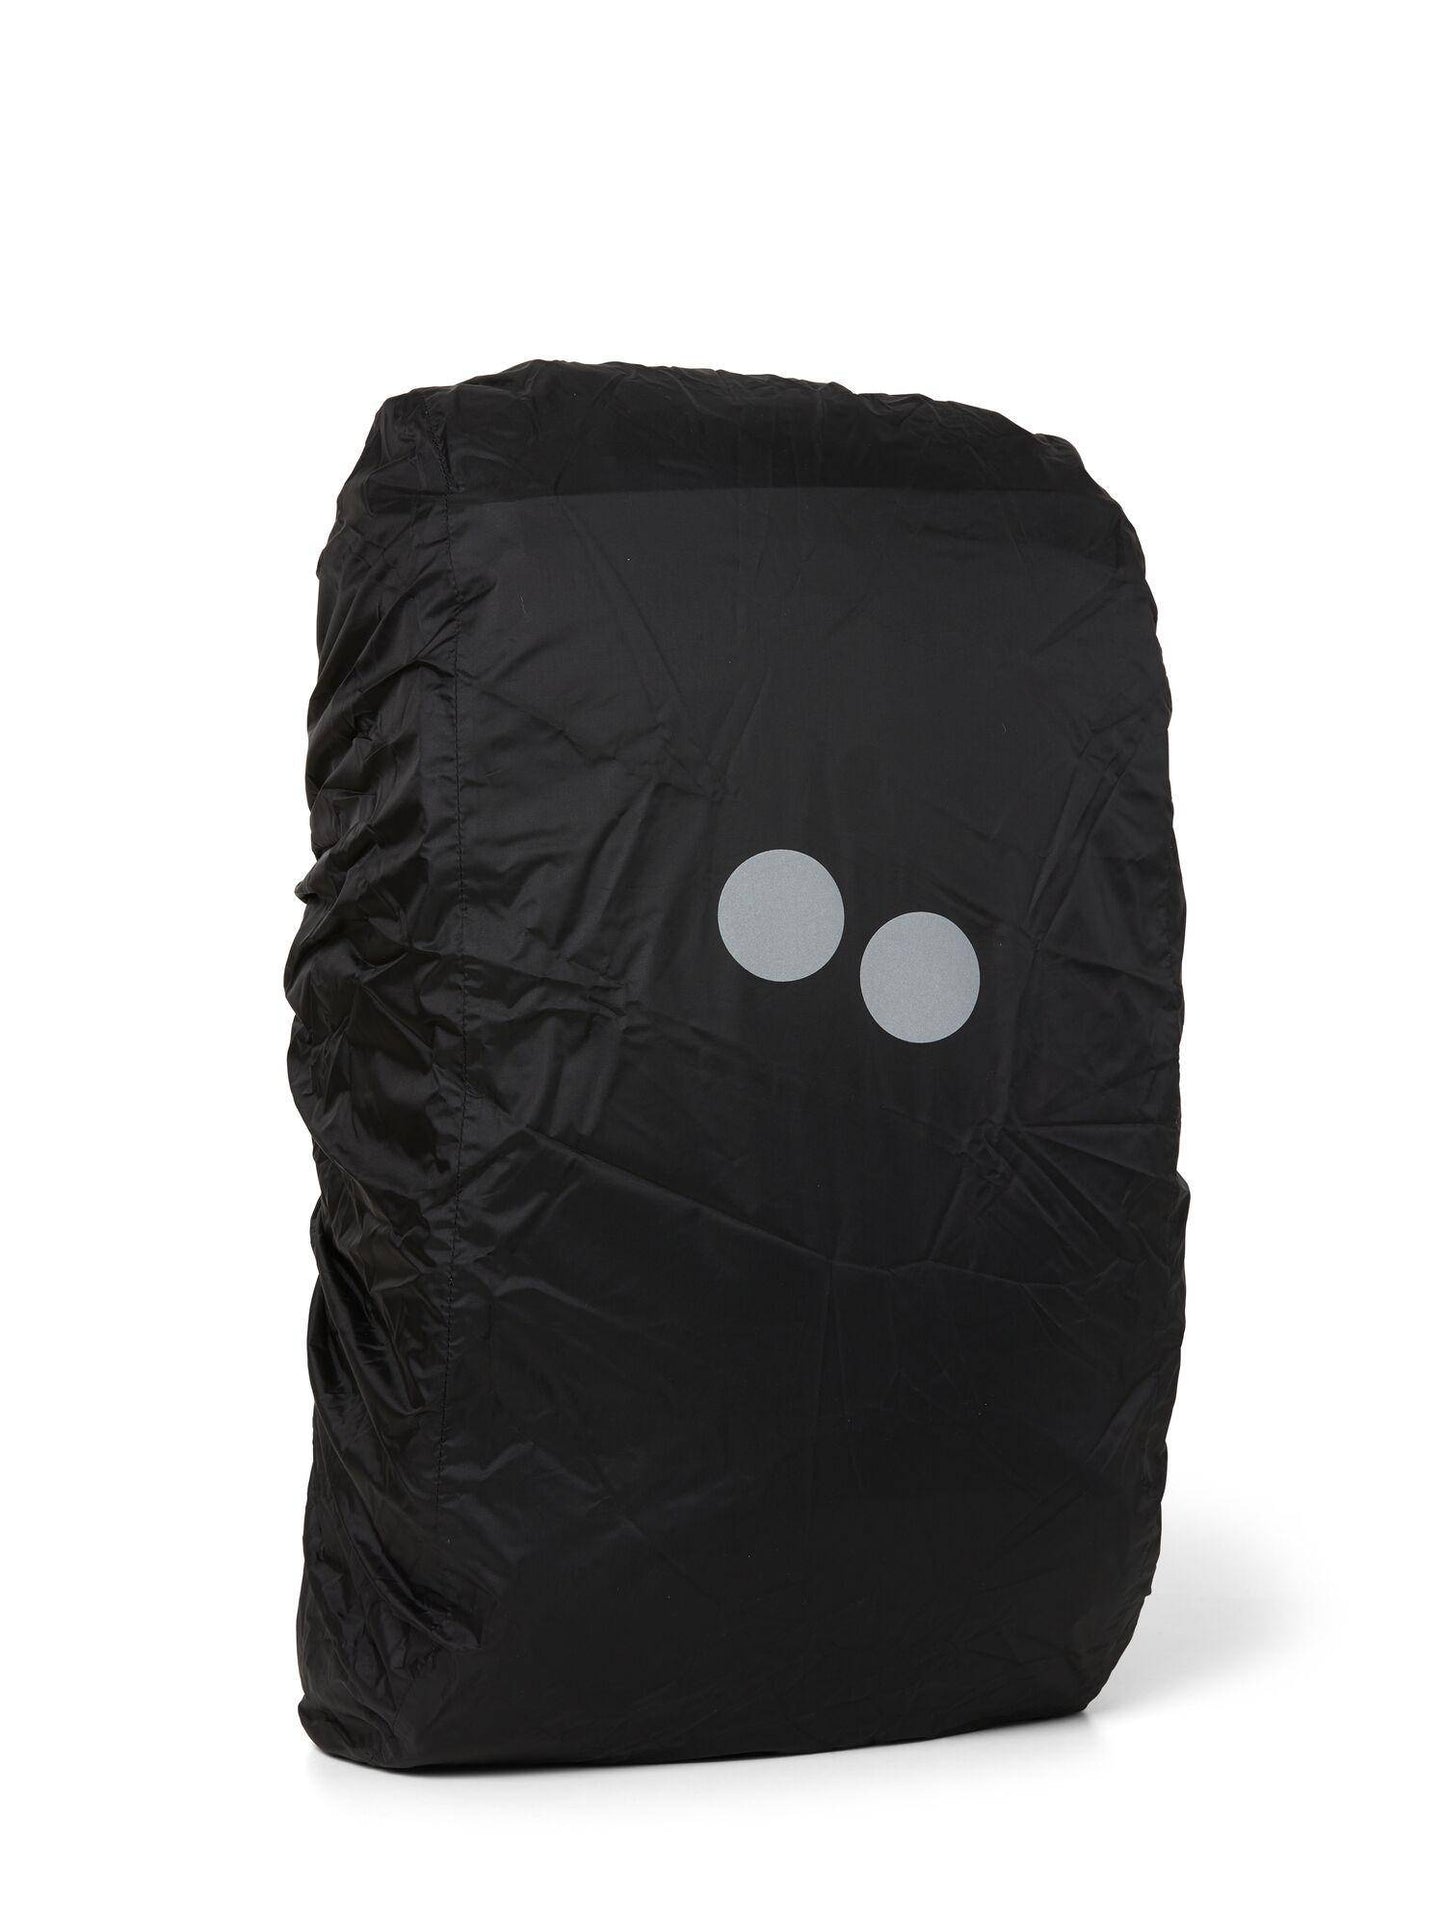 pinqponq-kover-blok-medium-protect-black-rain-cover-front